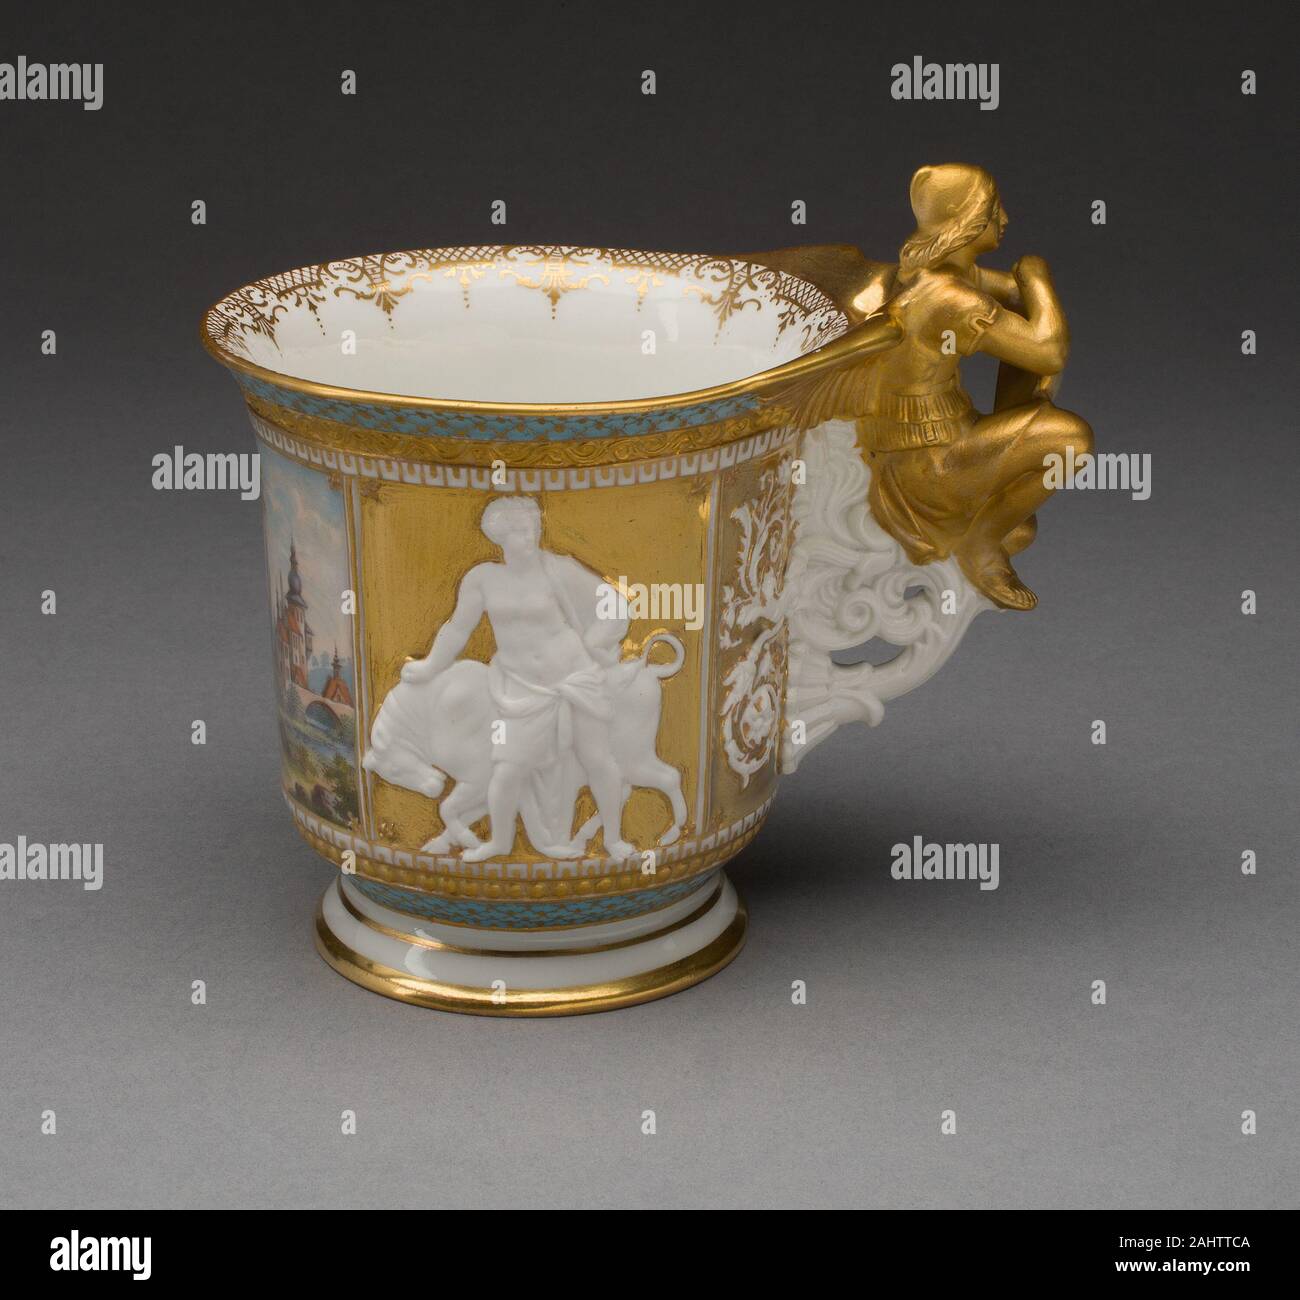 Königliche Porzellan-Manufaktur in Berlin (Prussia). Cup. 1850–1870.  Berlin. Hard-paste porcelain, polychrome enamels, and gilding Stock Photo -  Alamy